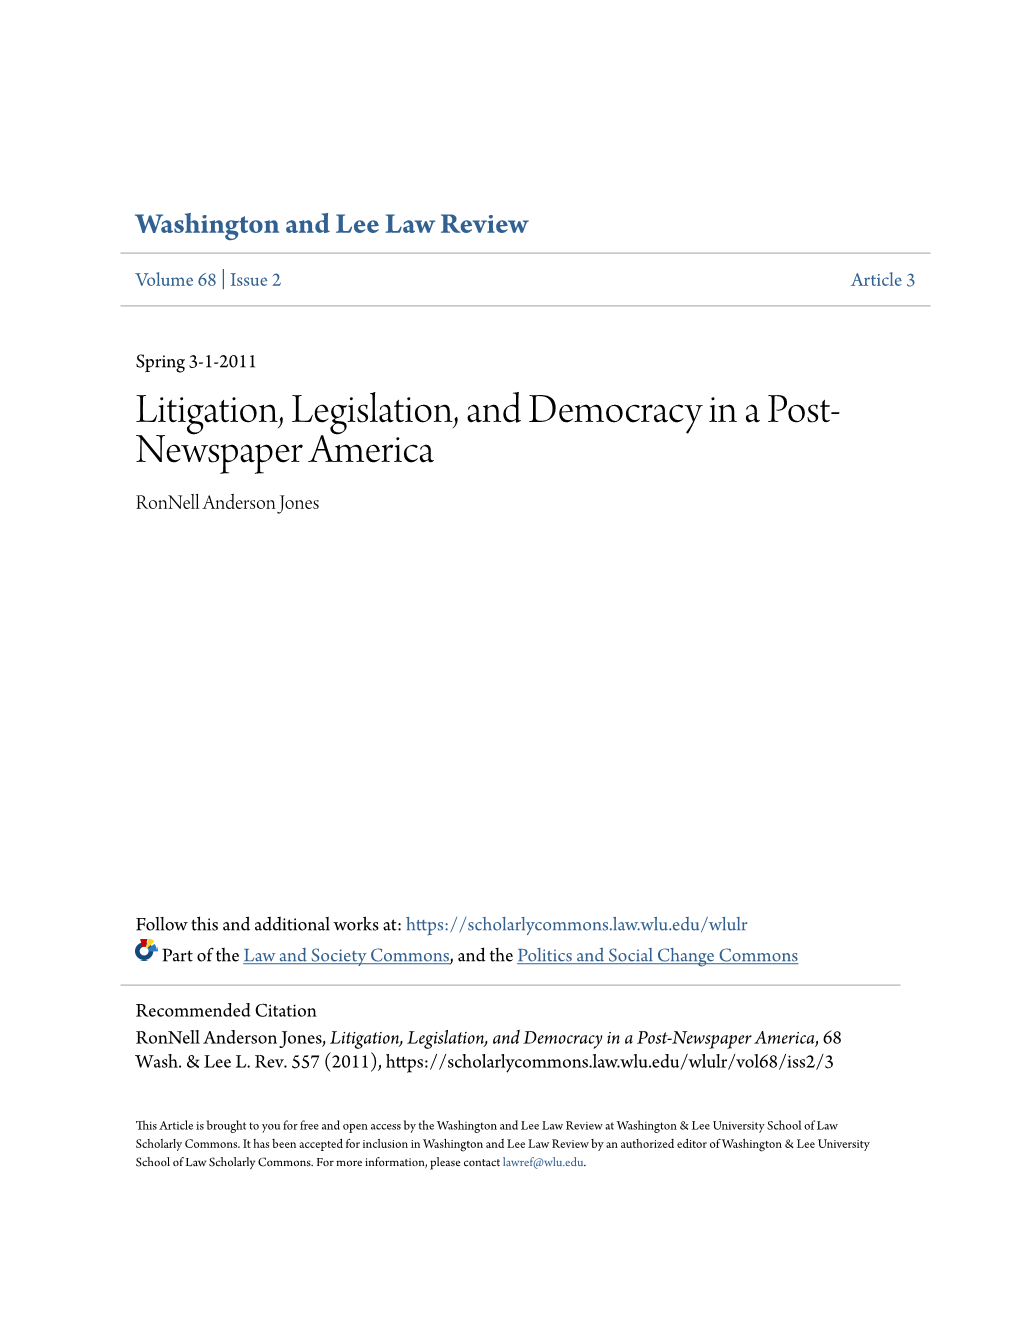 Litigation, Legislation, and Democracy in a Post-Newspaper America, 68 Wash